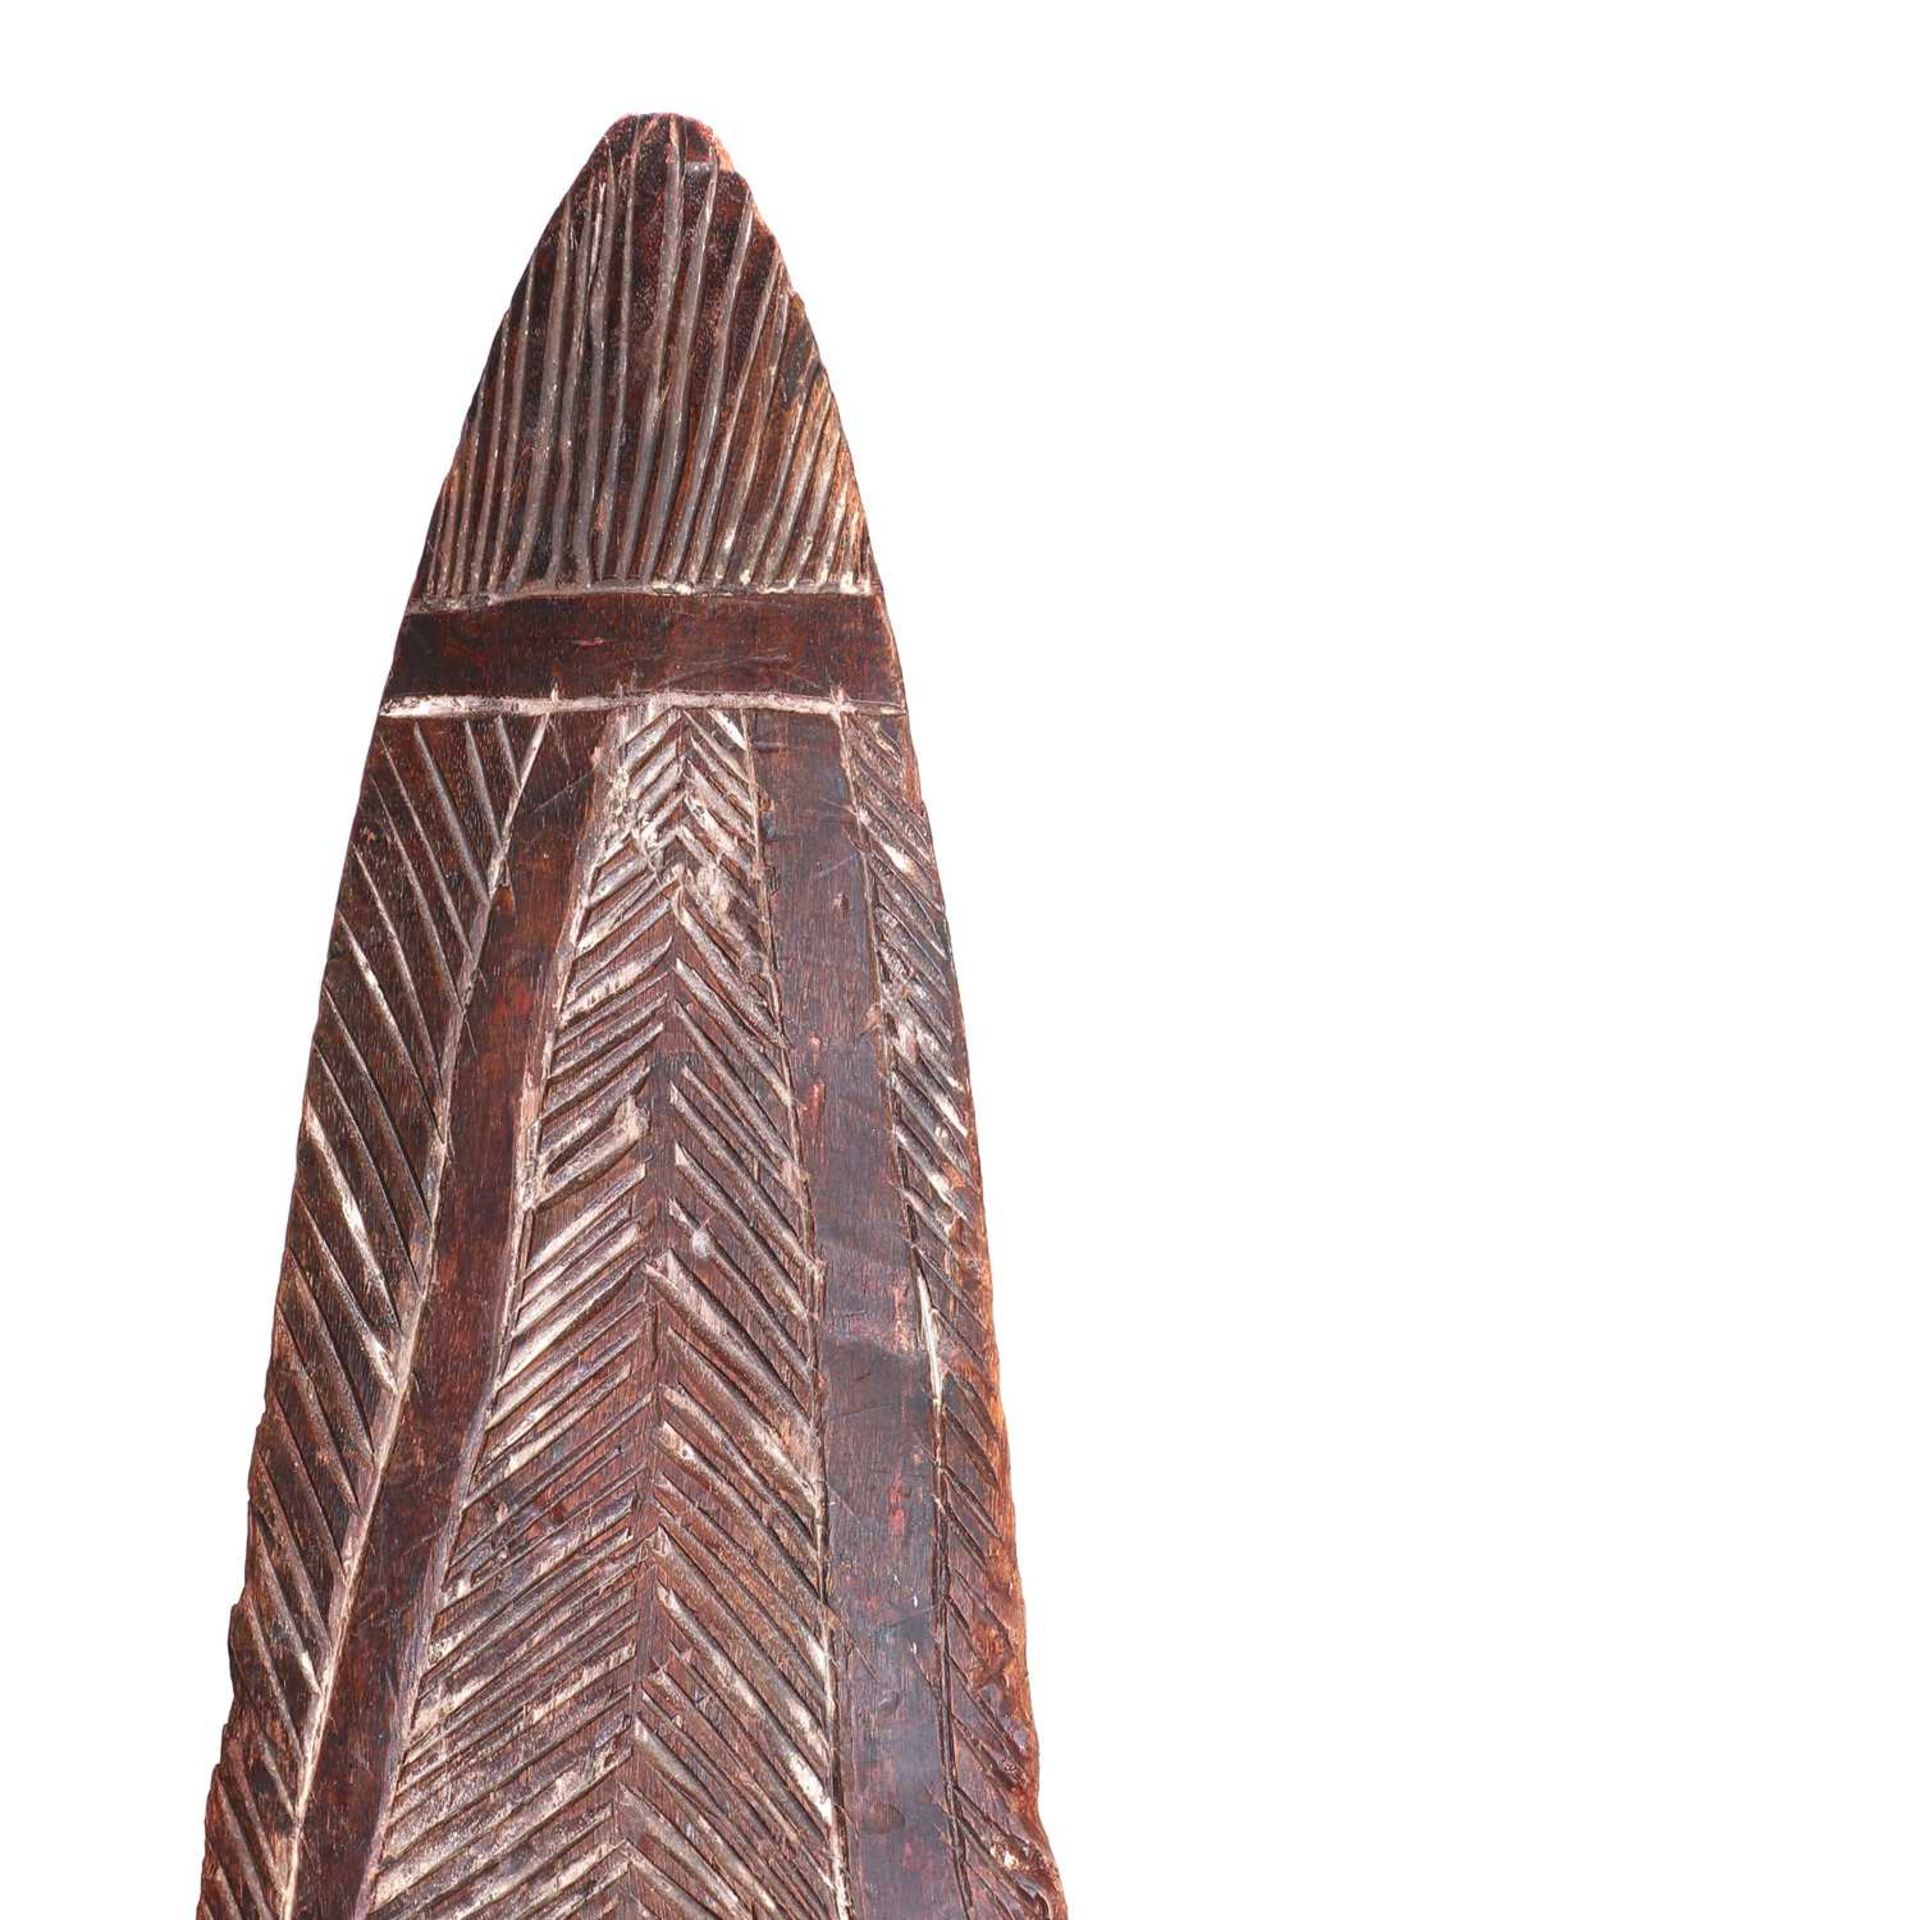 A rare Australian Aboriginal hardwood parrying shield, - Image 5 of 5